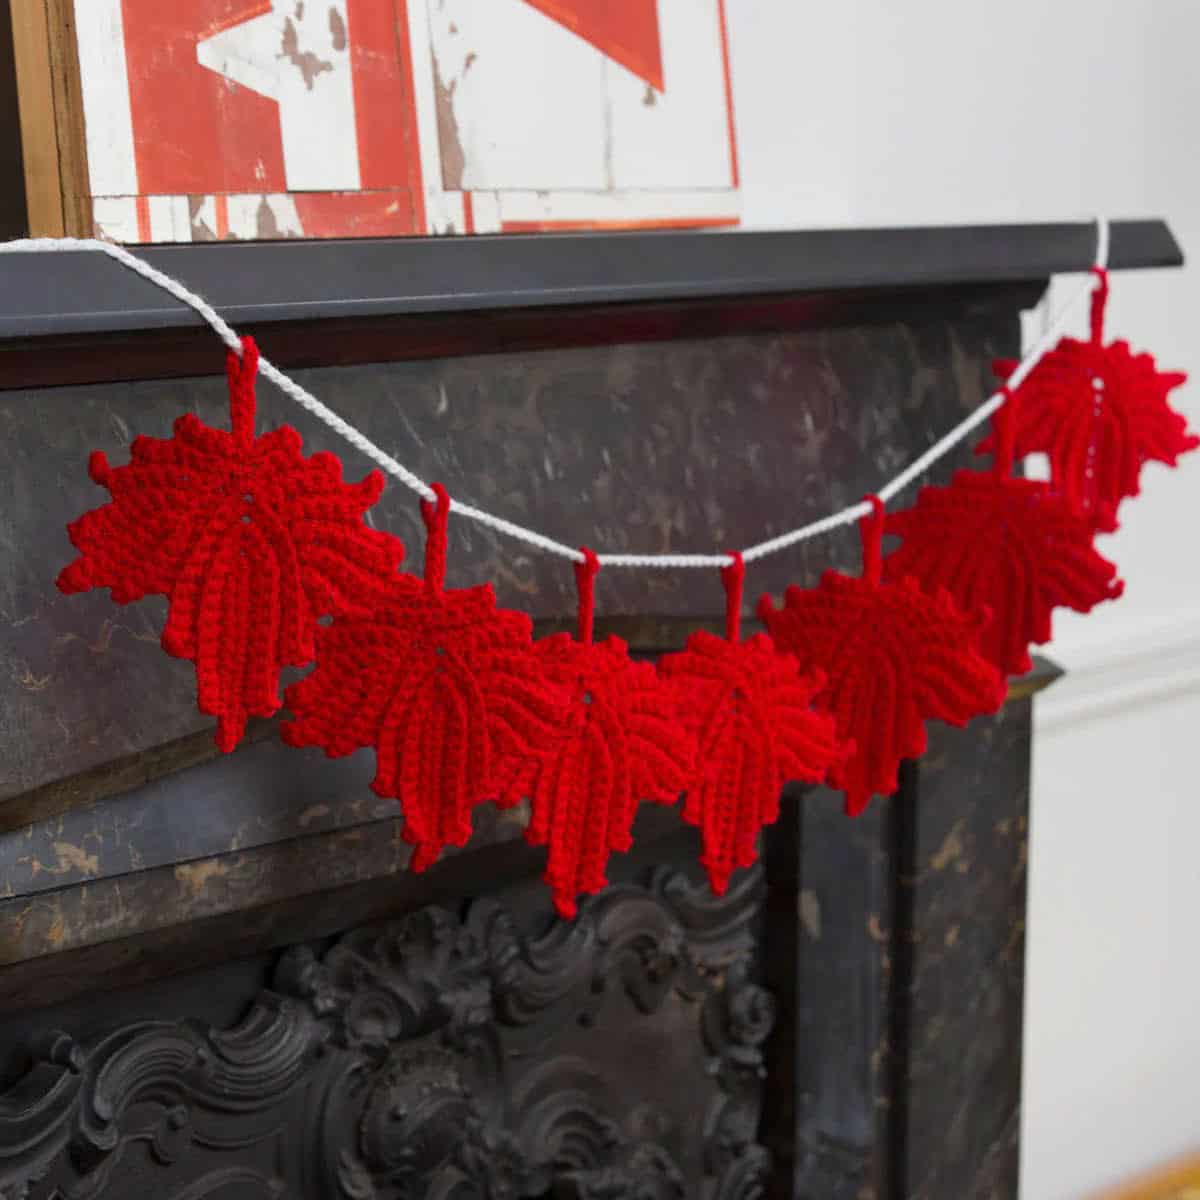 Crochet Red Maple Leaf Banner Pattern